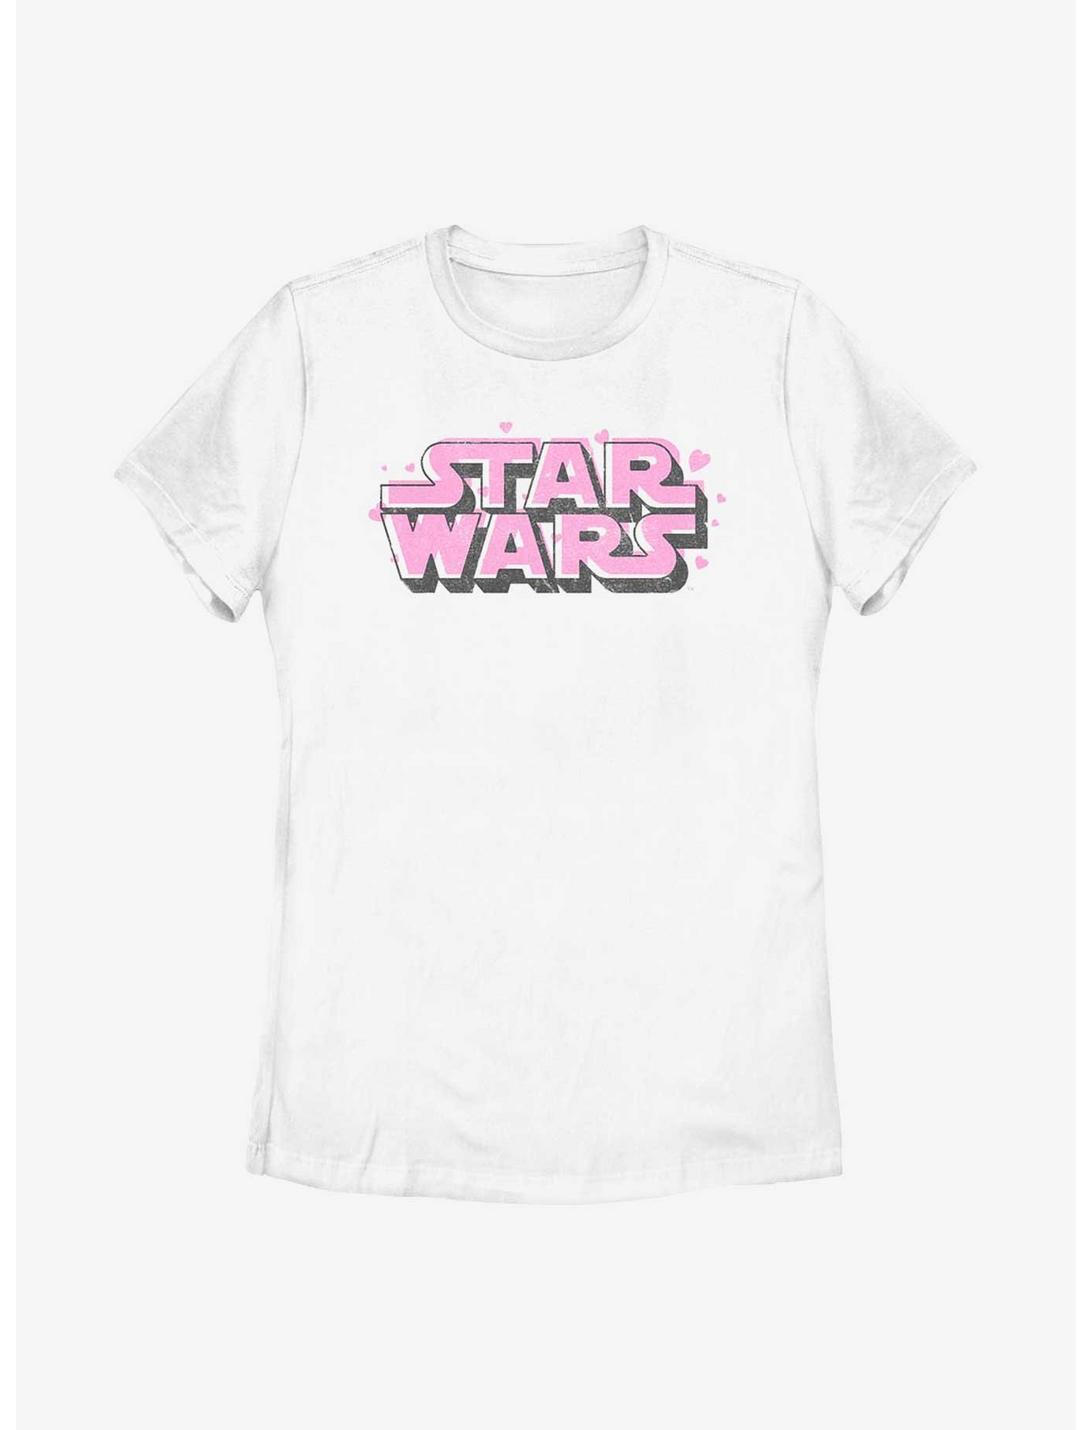 Star Wars Floating Hearts Logo Womens T-Shirt, WHITE, hi-res